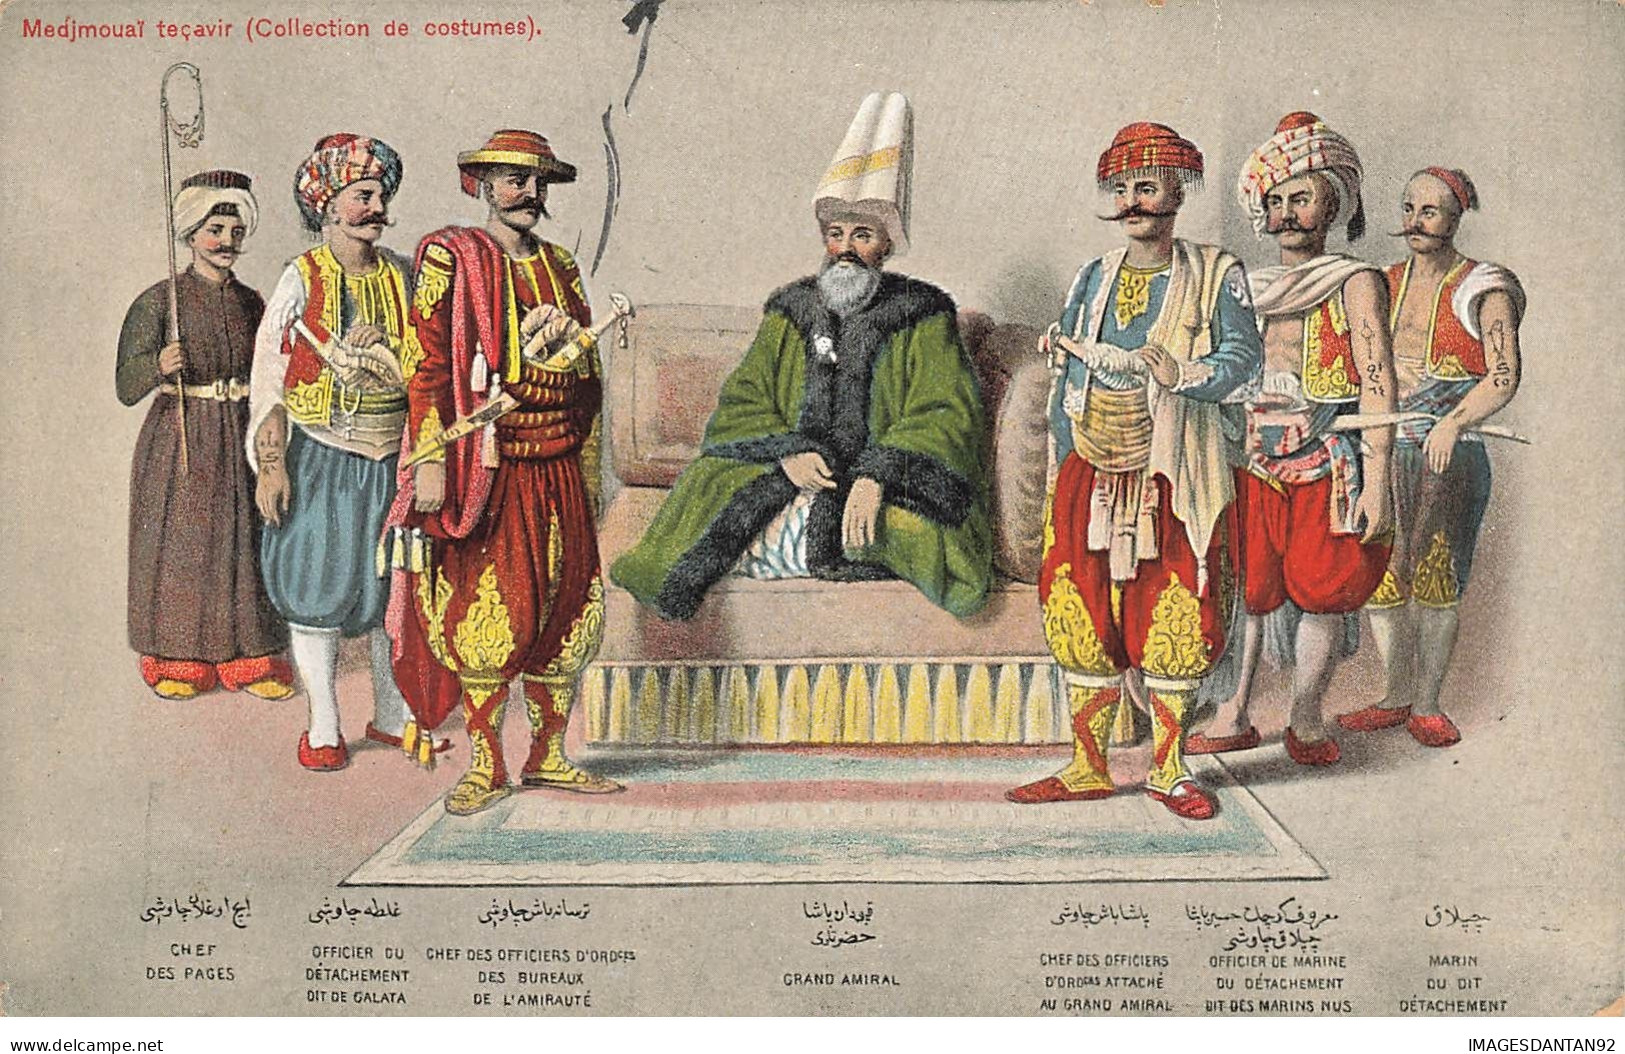 TURQUIE #28355 TURKEY TURKISH MEDJMOUAI TACAVIR COSTUMES - Turkey